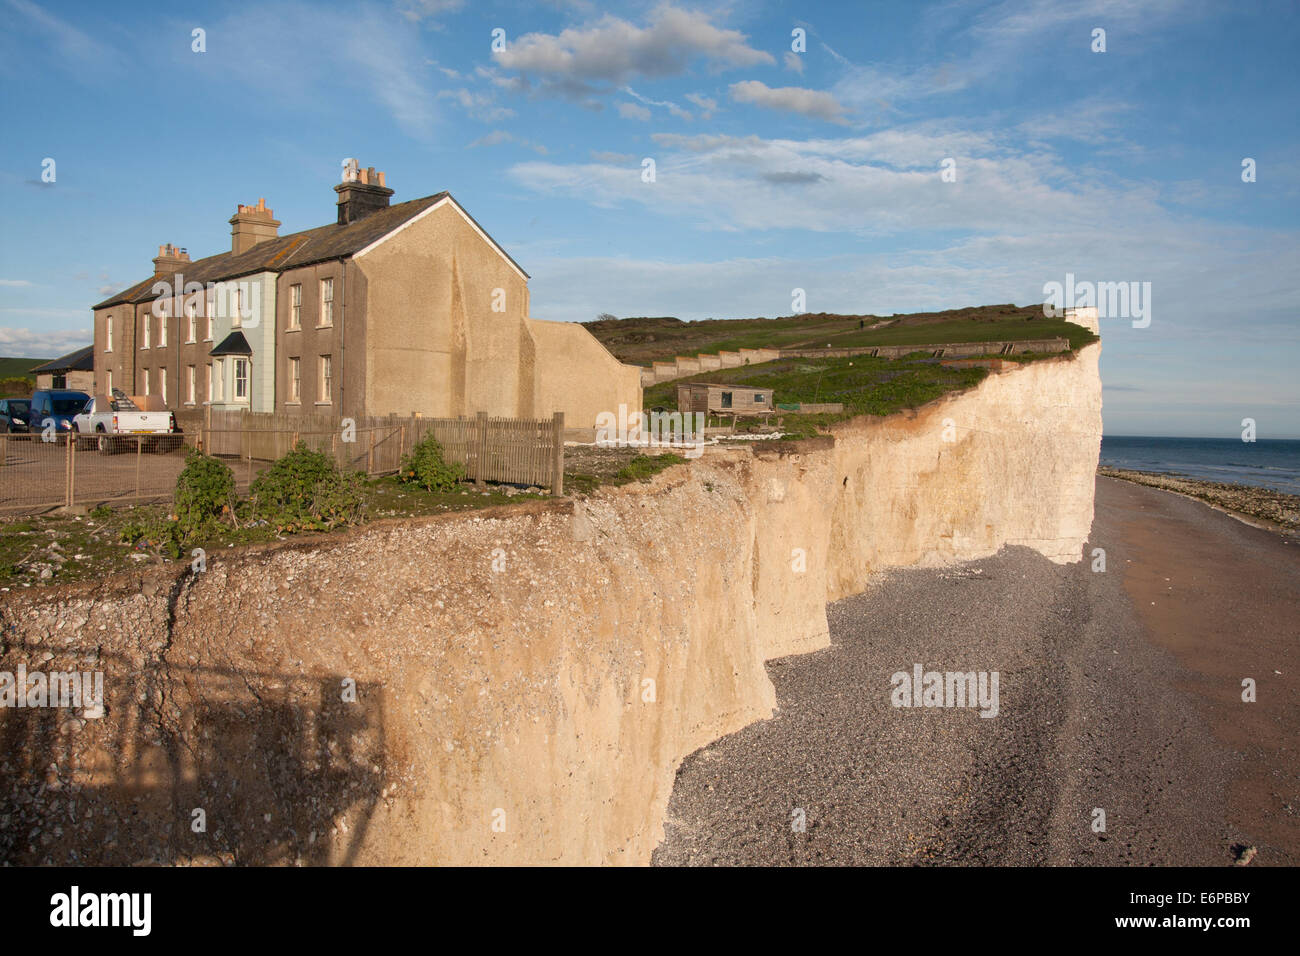 coastguard cottages & cliff erosion, Birling Gap, East Sussex Stock Photo